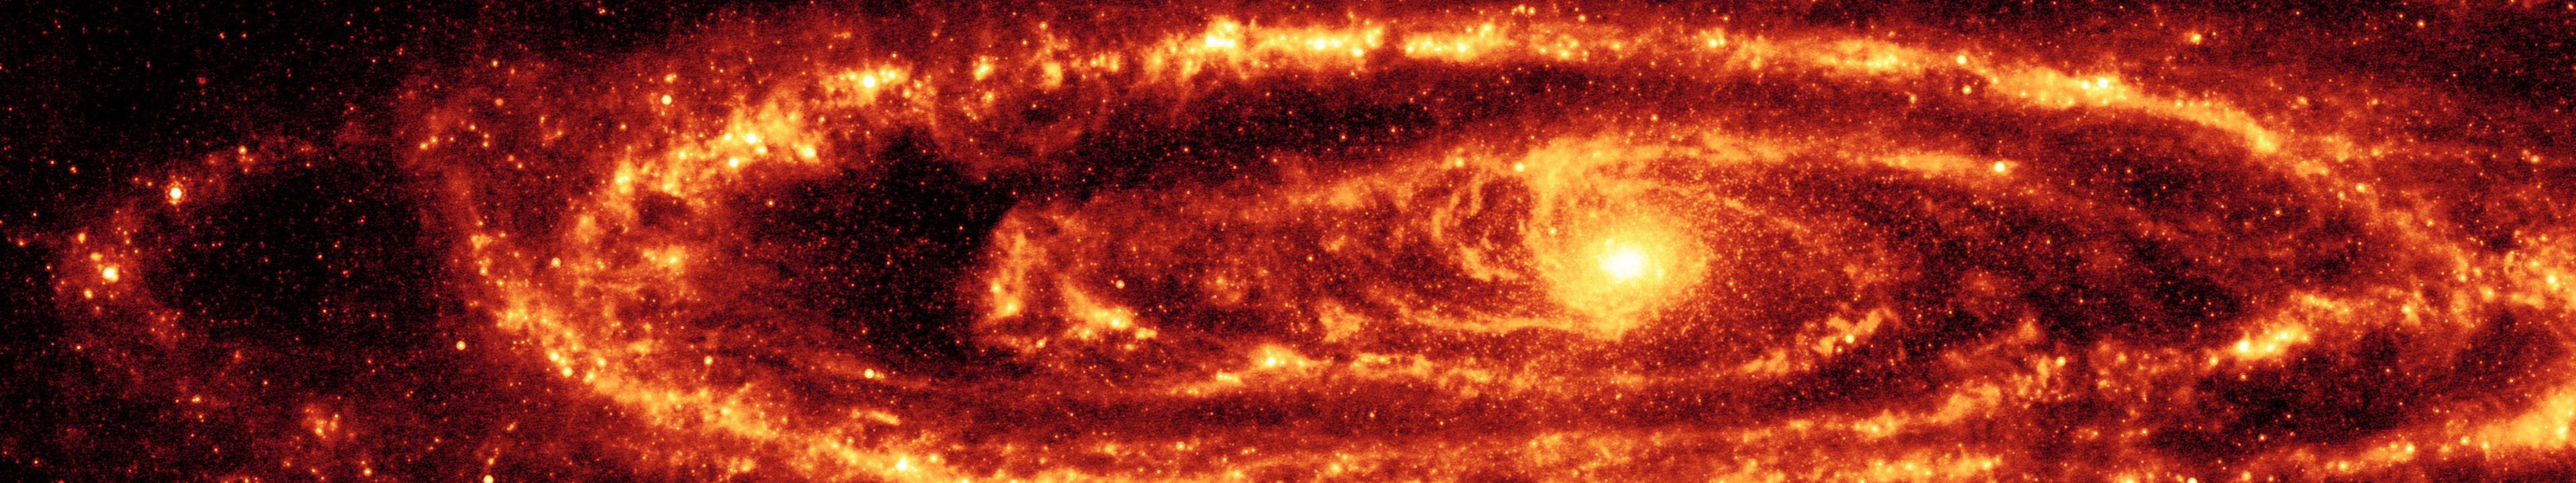 Galax HD Wallpaper | Background Image